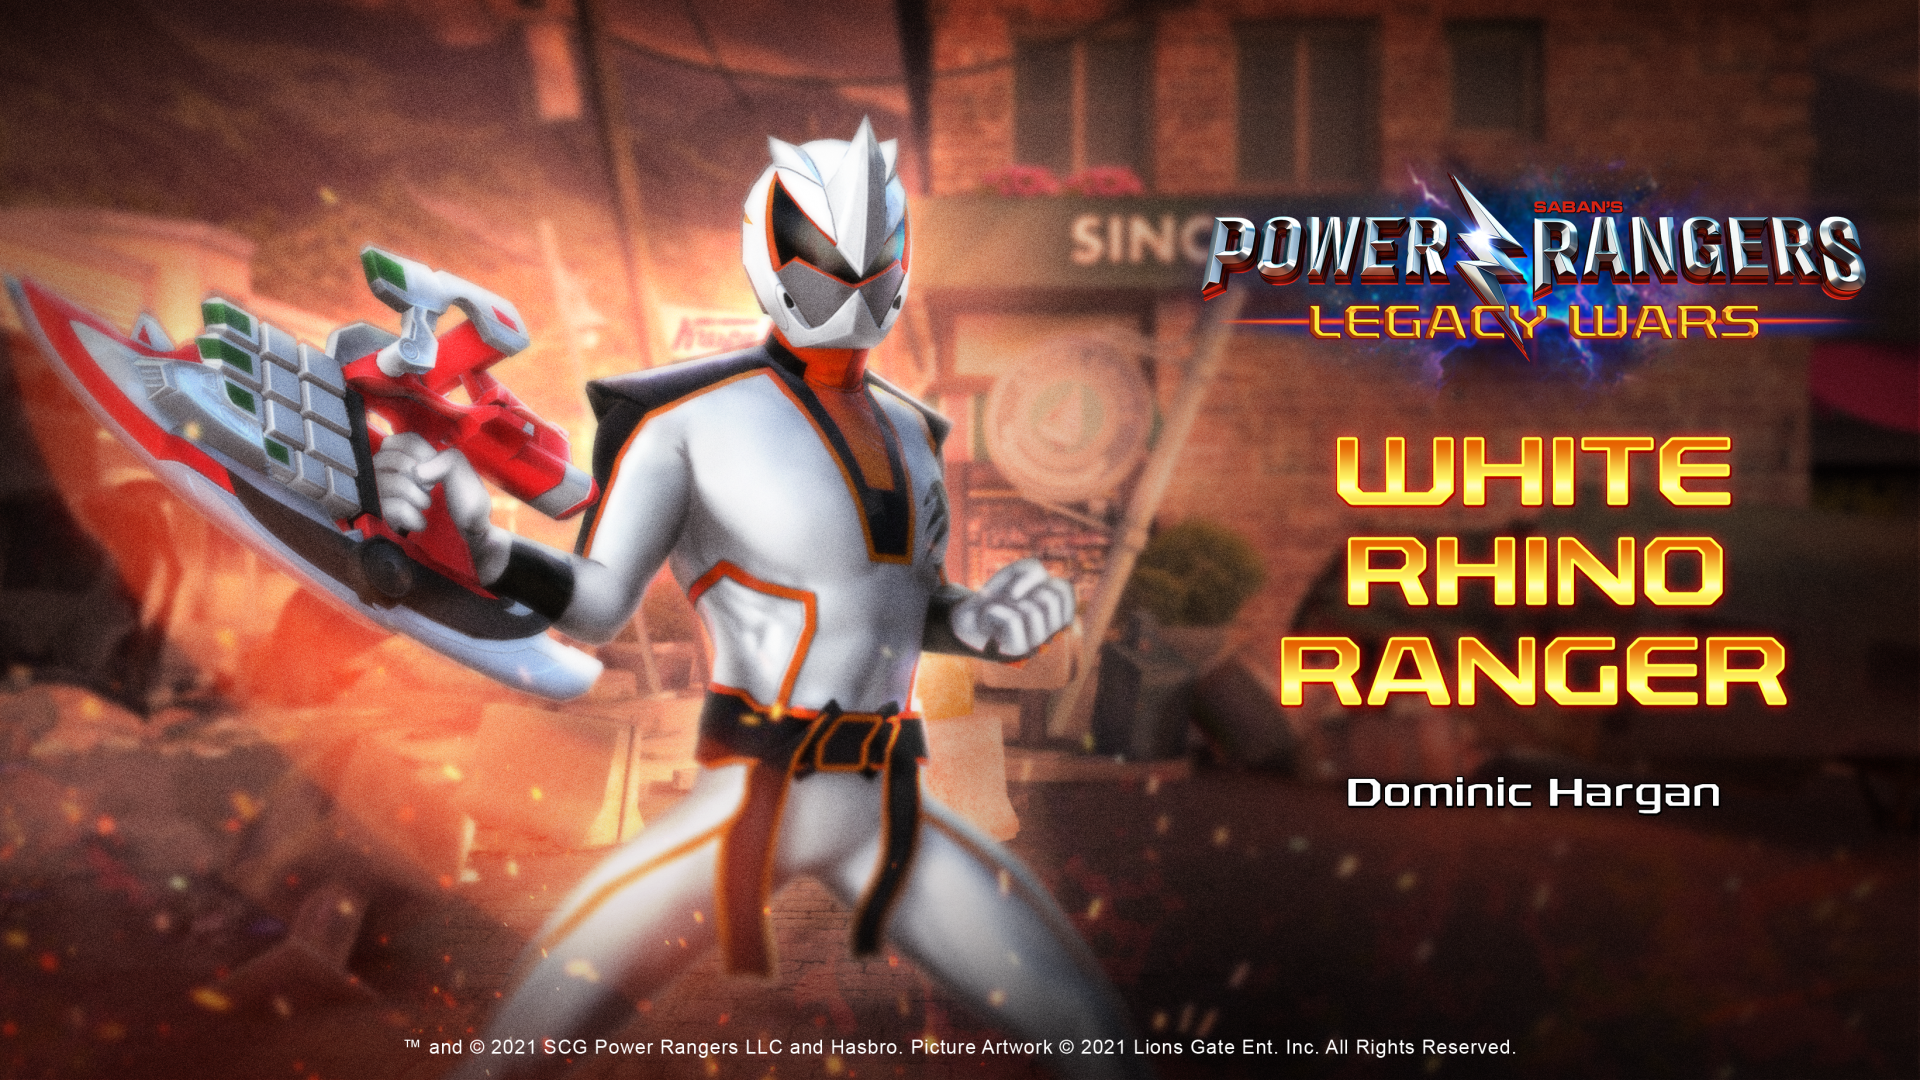 Power Rangers | Dominic Hargan (White Rhino Ranger) Enters the Grid